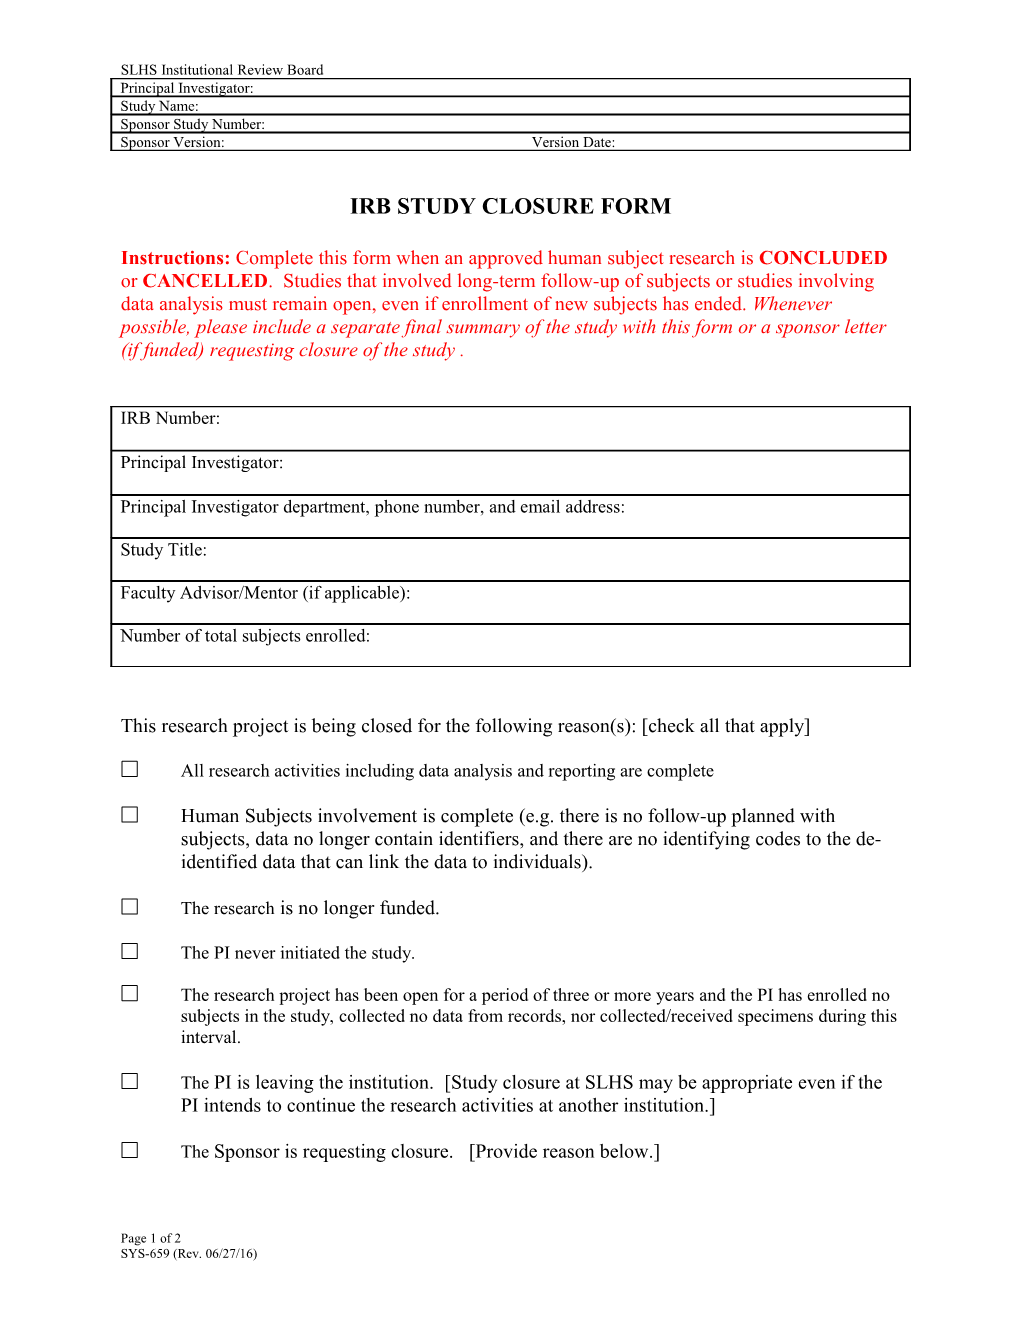 IRB Study Closure Form